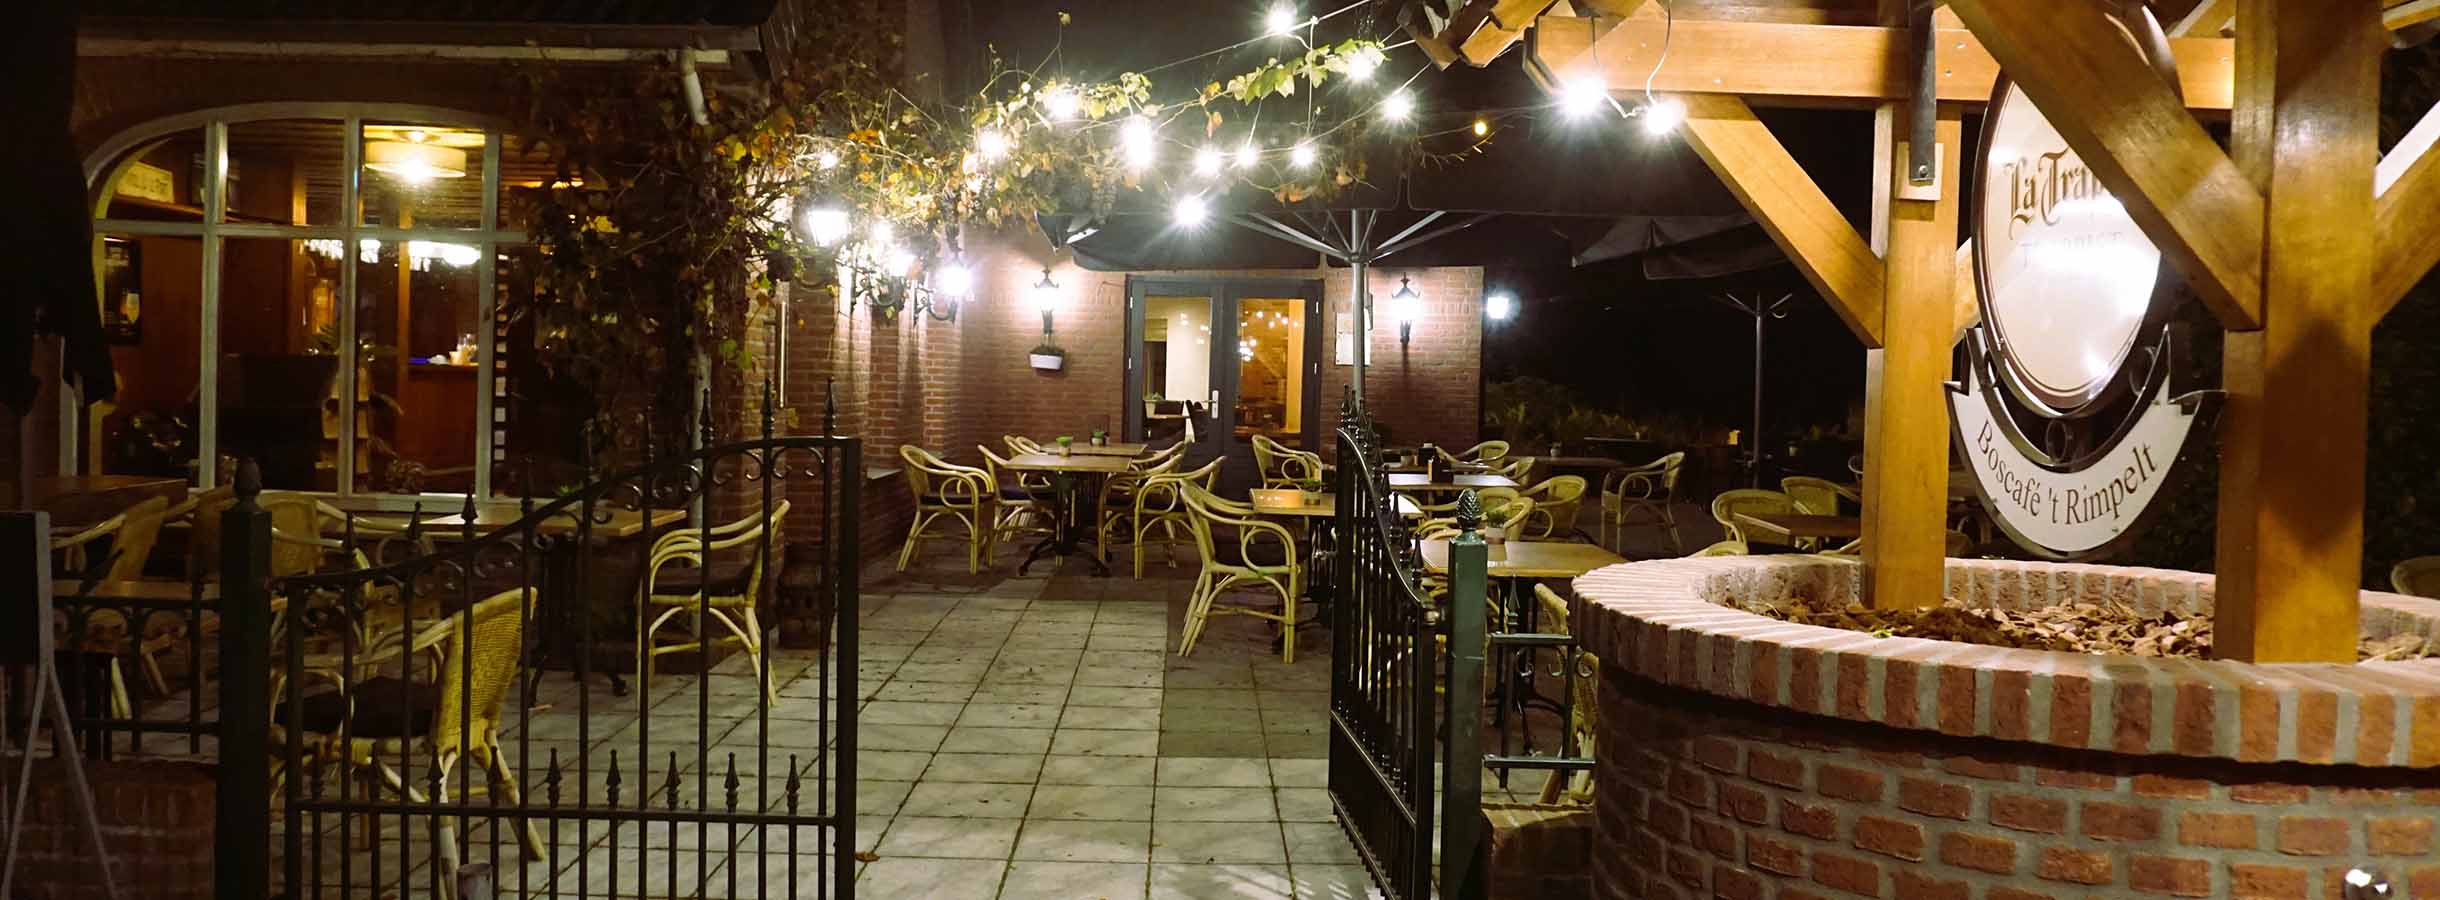 Restaurant Boscafe het Rimpelt Terras bij avondlicht